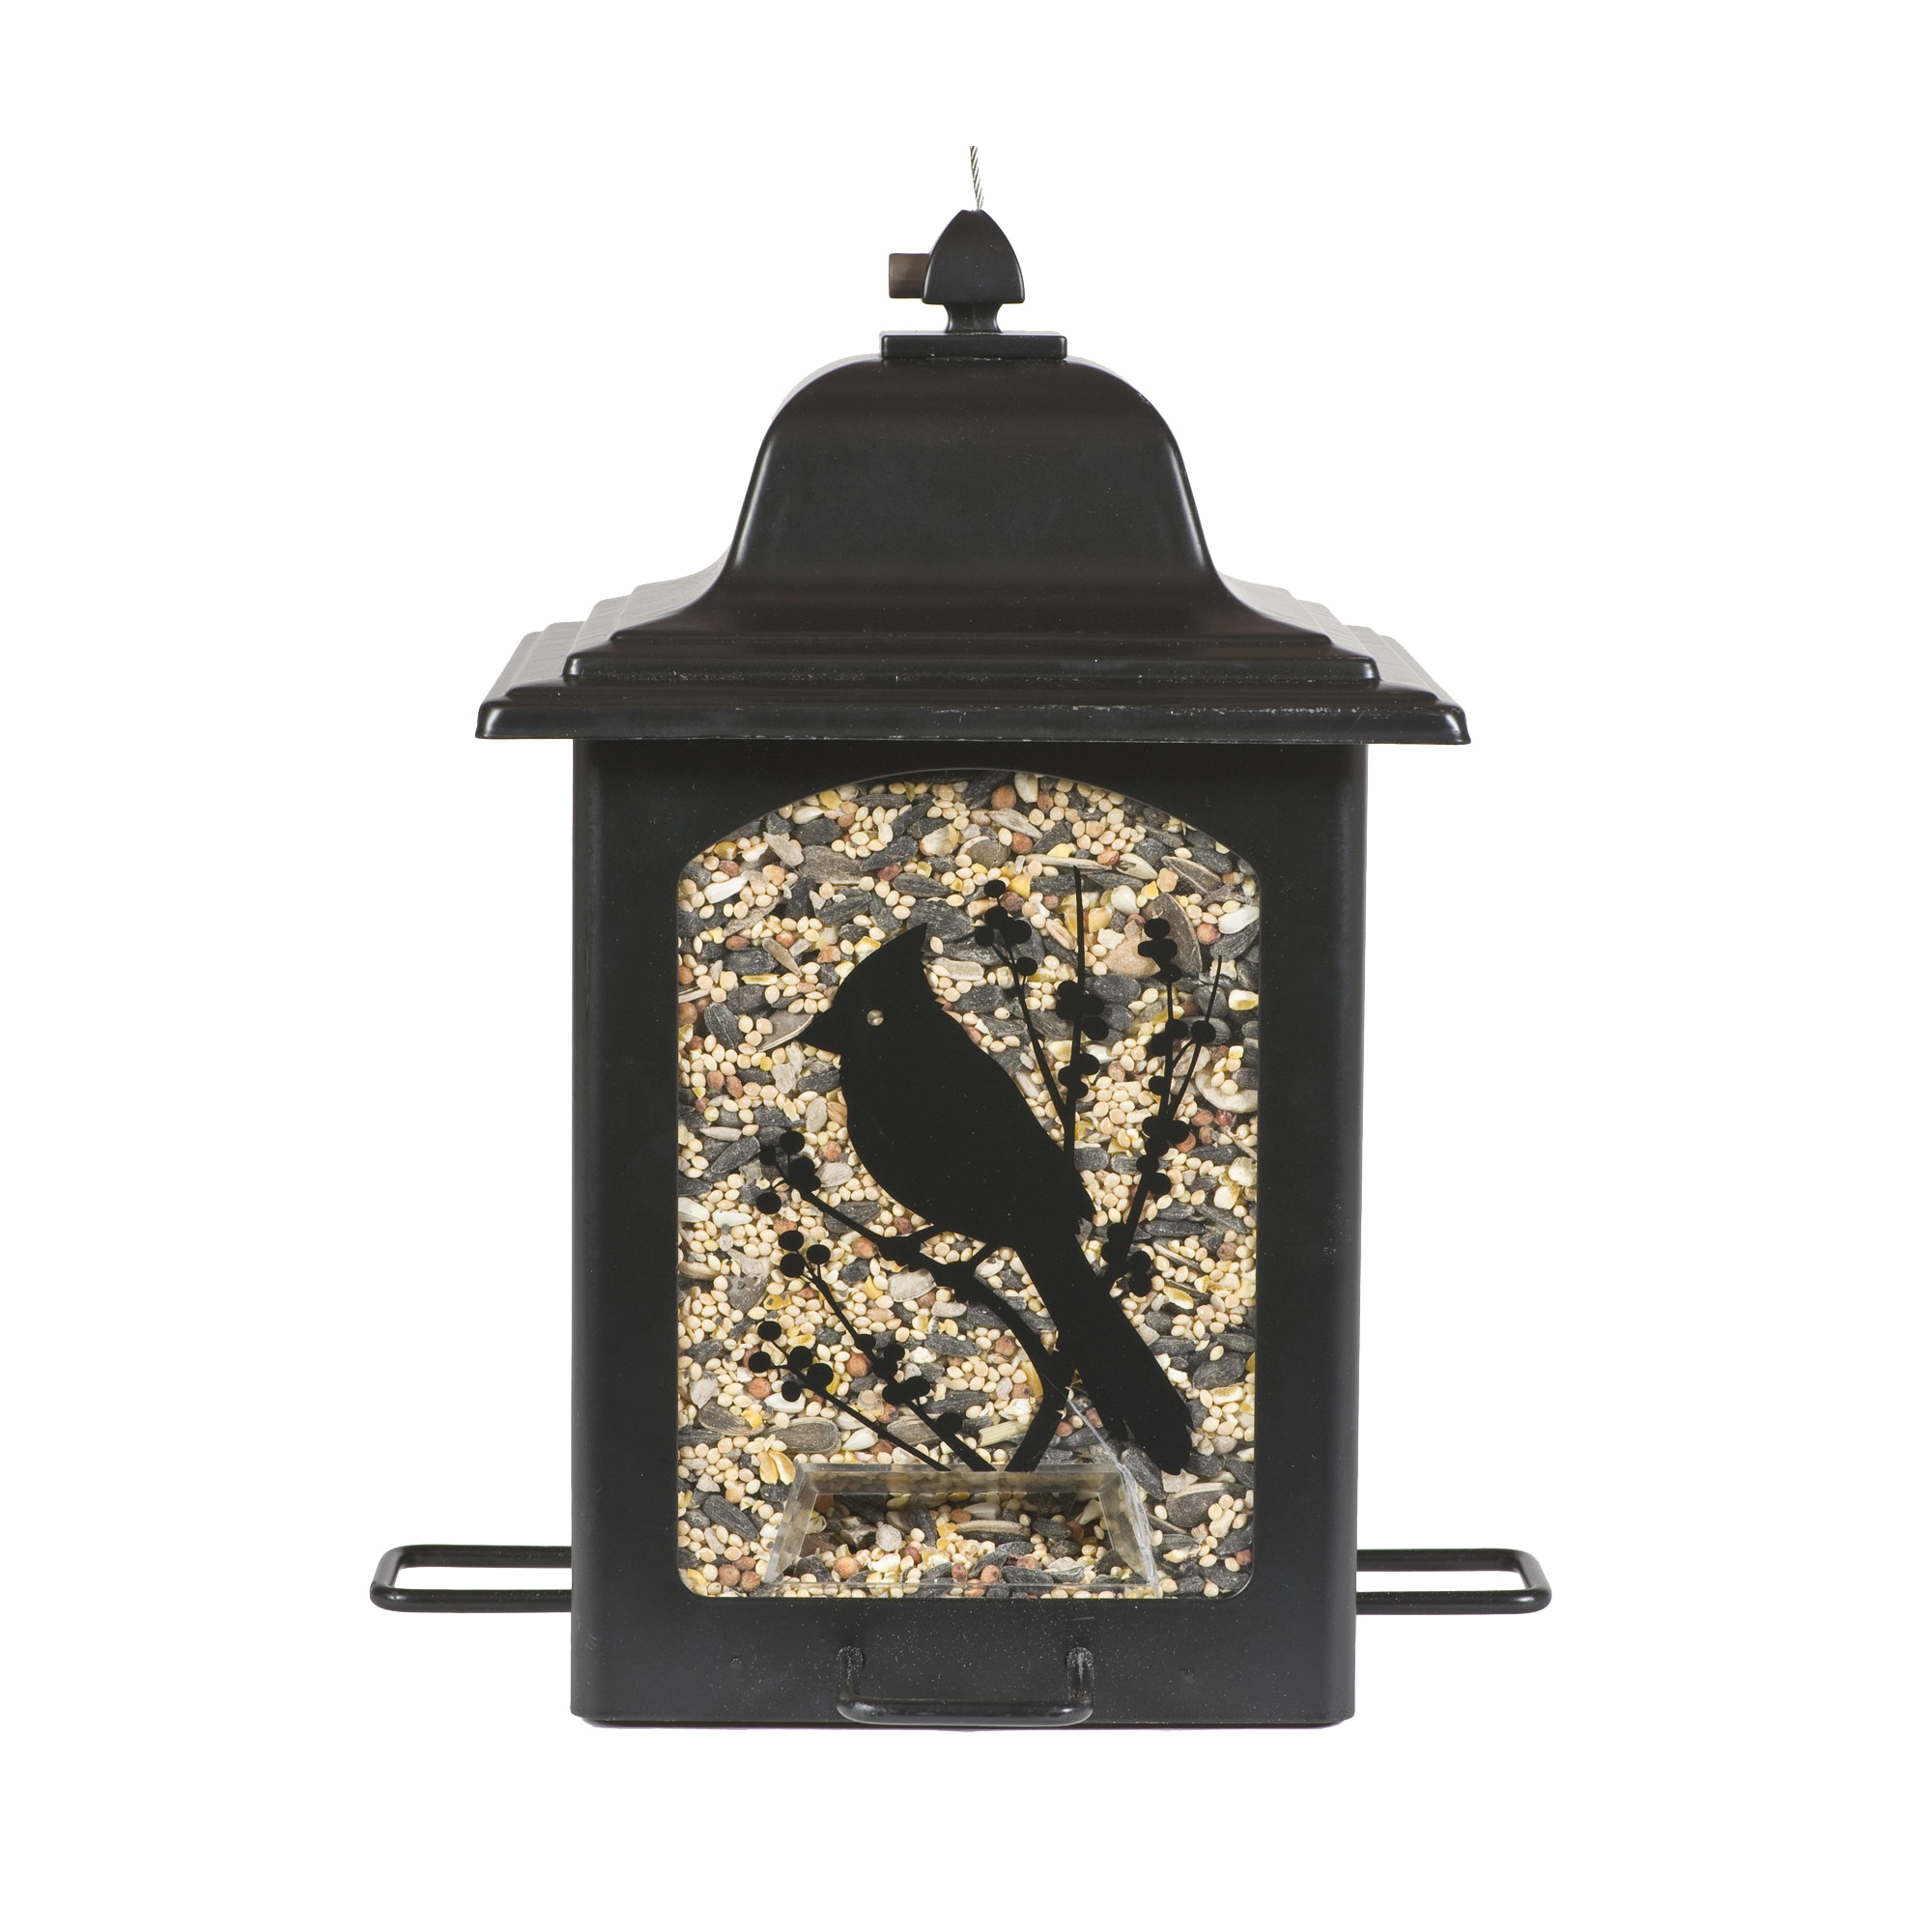 Perky-Pet 363 Lantern Bird Feeder, Screen-Printed Birds and Berries, 3 lb, 4 -Port/Perch, Black, Hook Mounting - 1